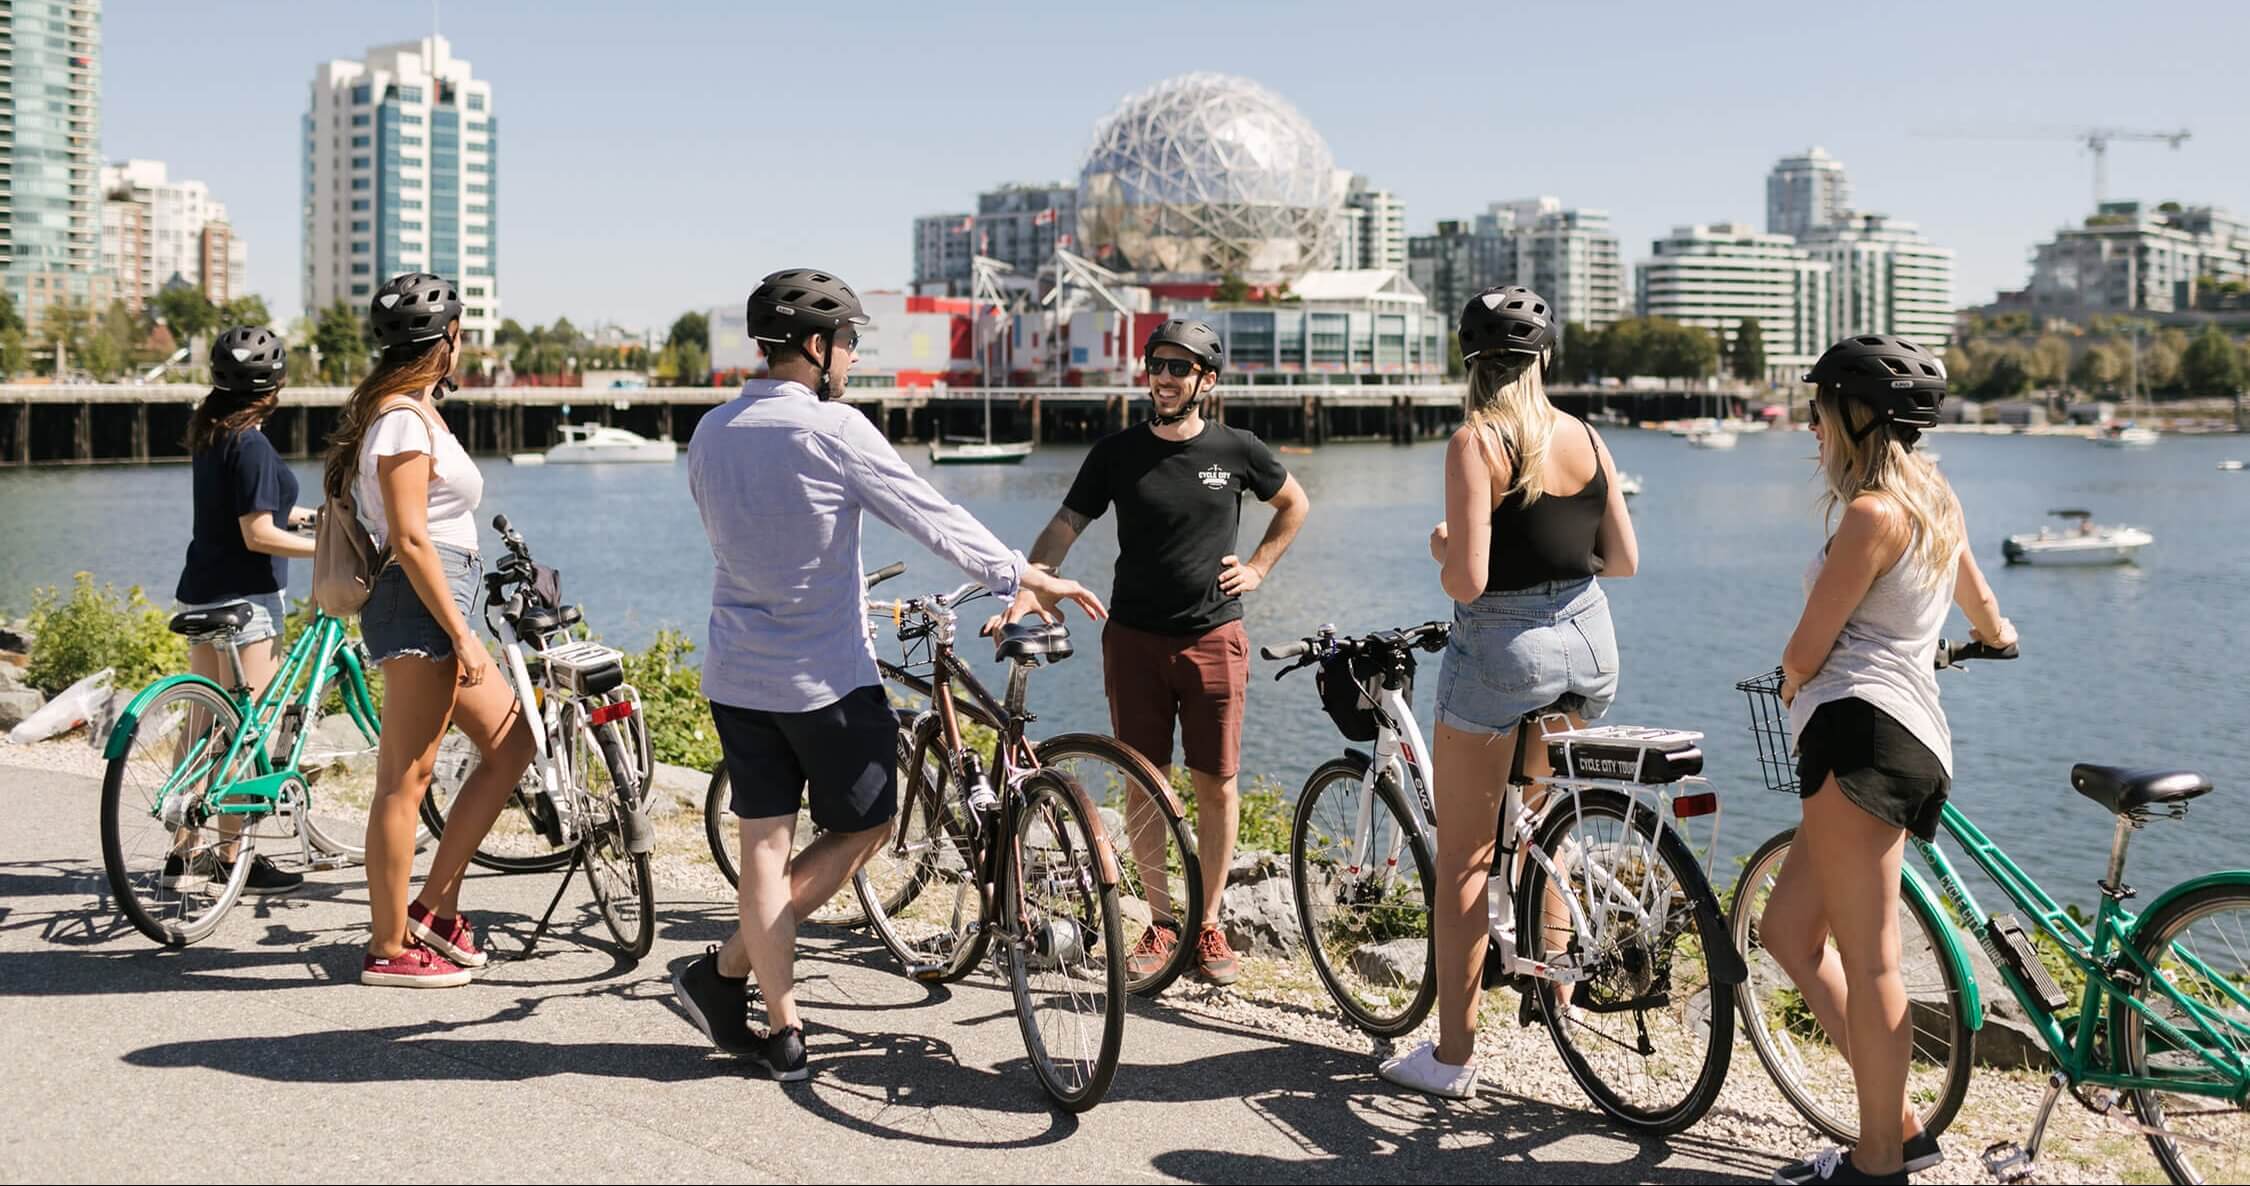 vancouver city bike tour